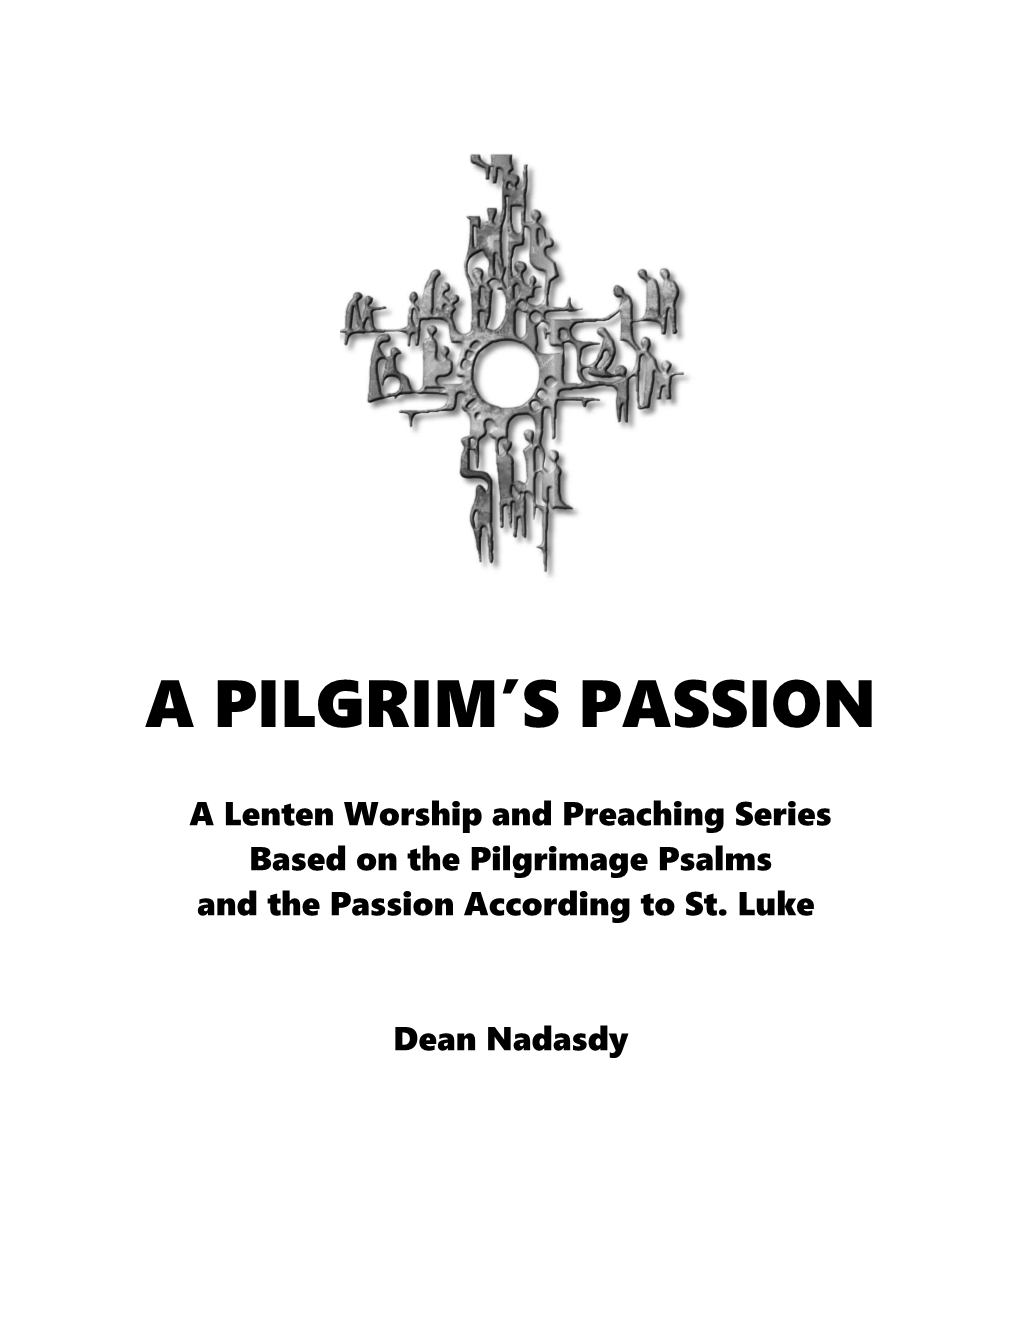 A Lenten Worship and Preaching Series